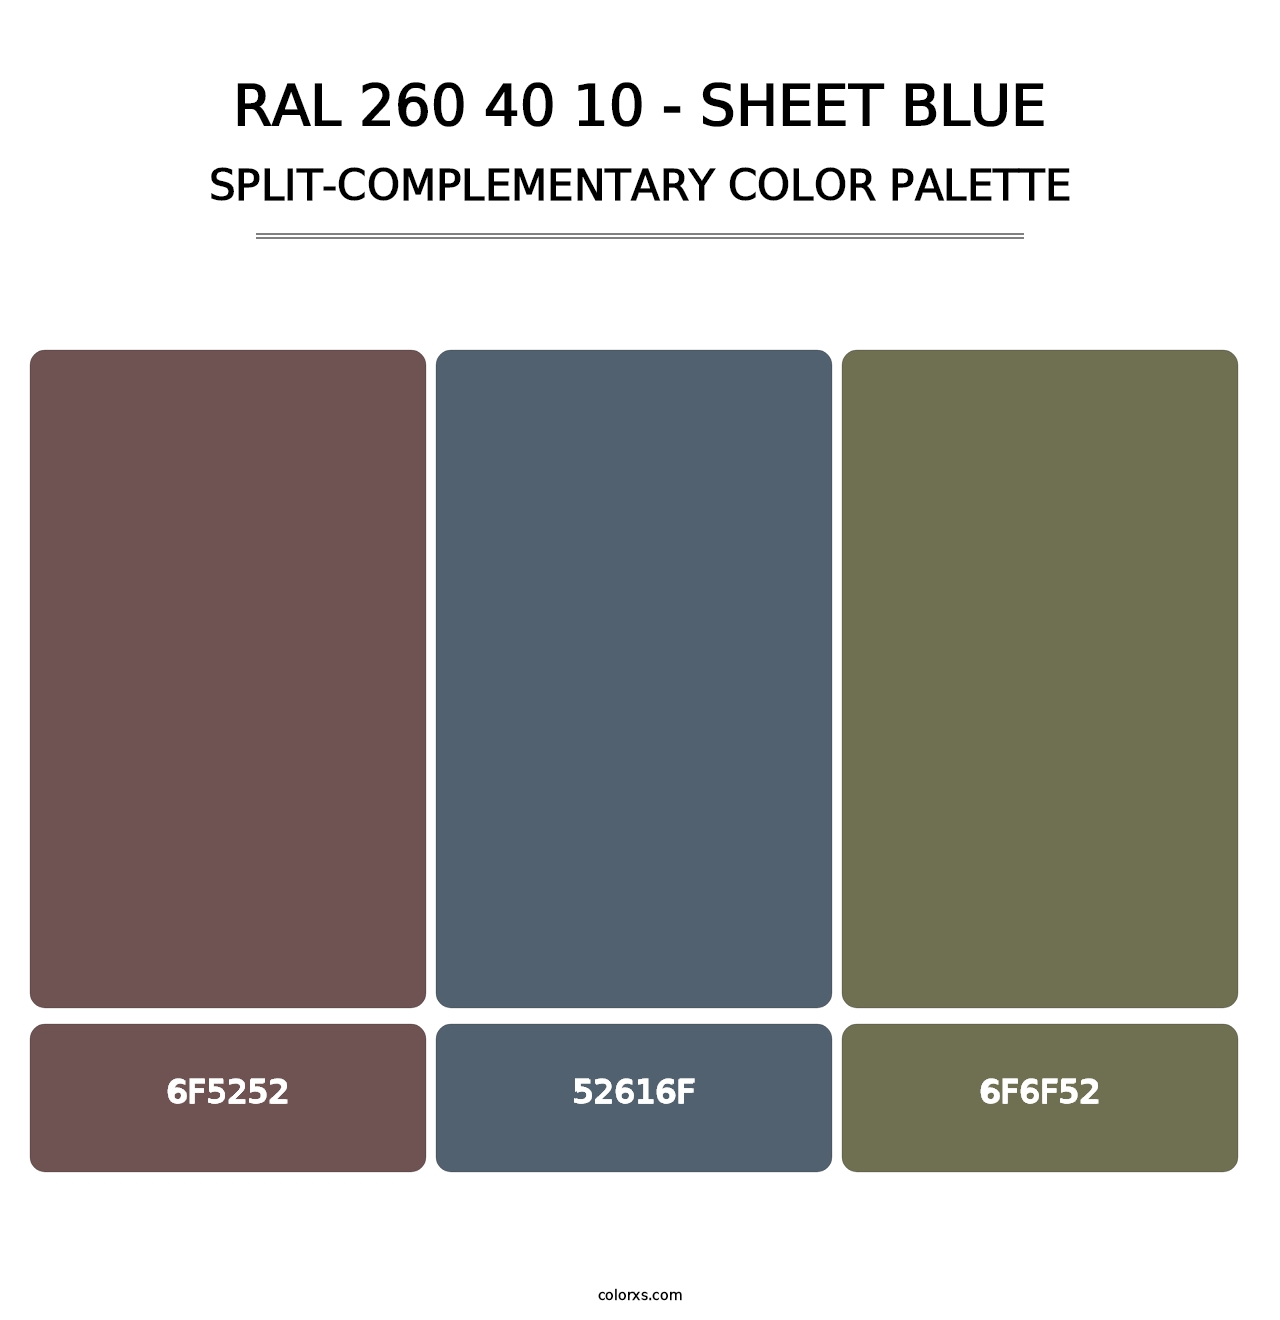 RAL 260 40 10 - Sheet Blue - Split-Complementary Color Palette